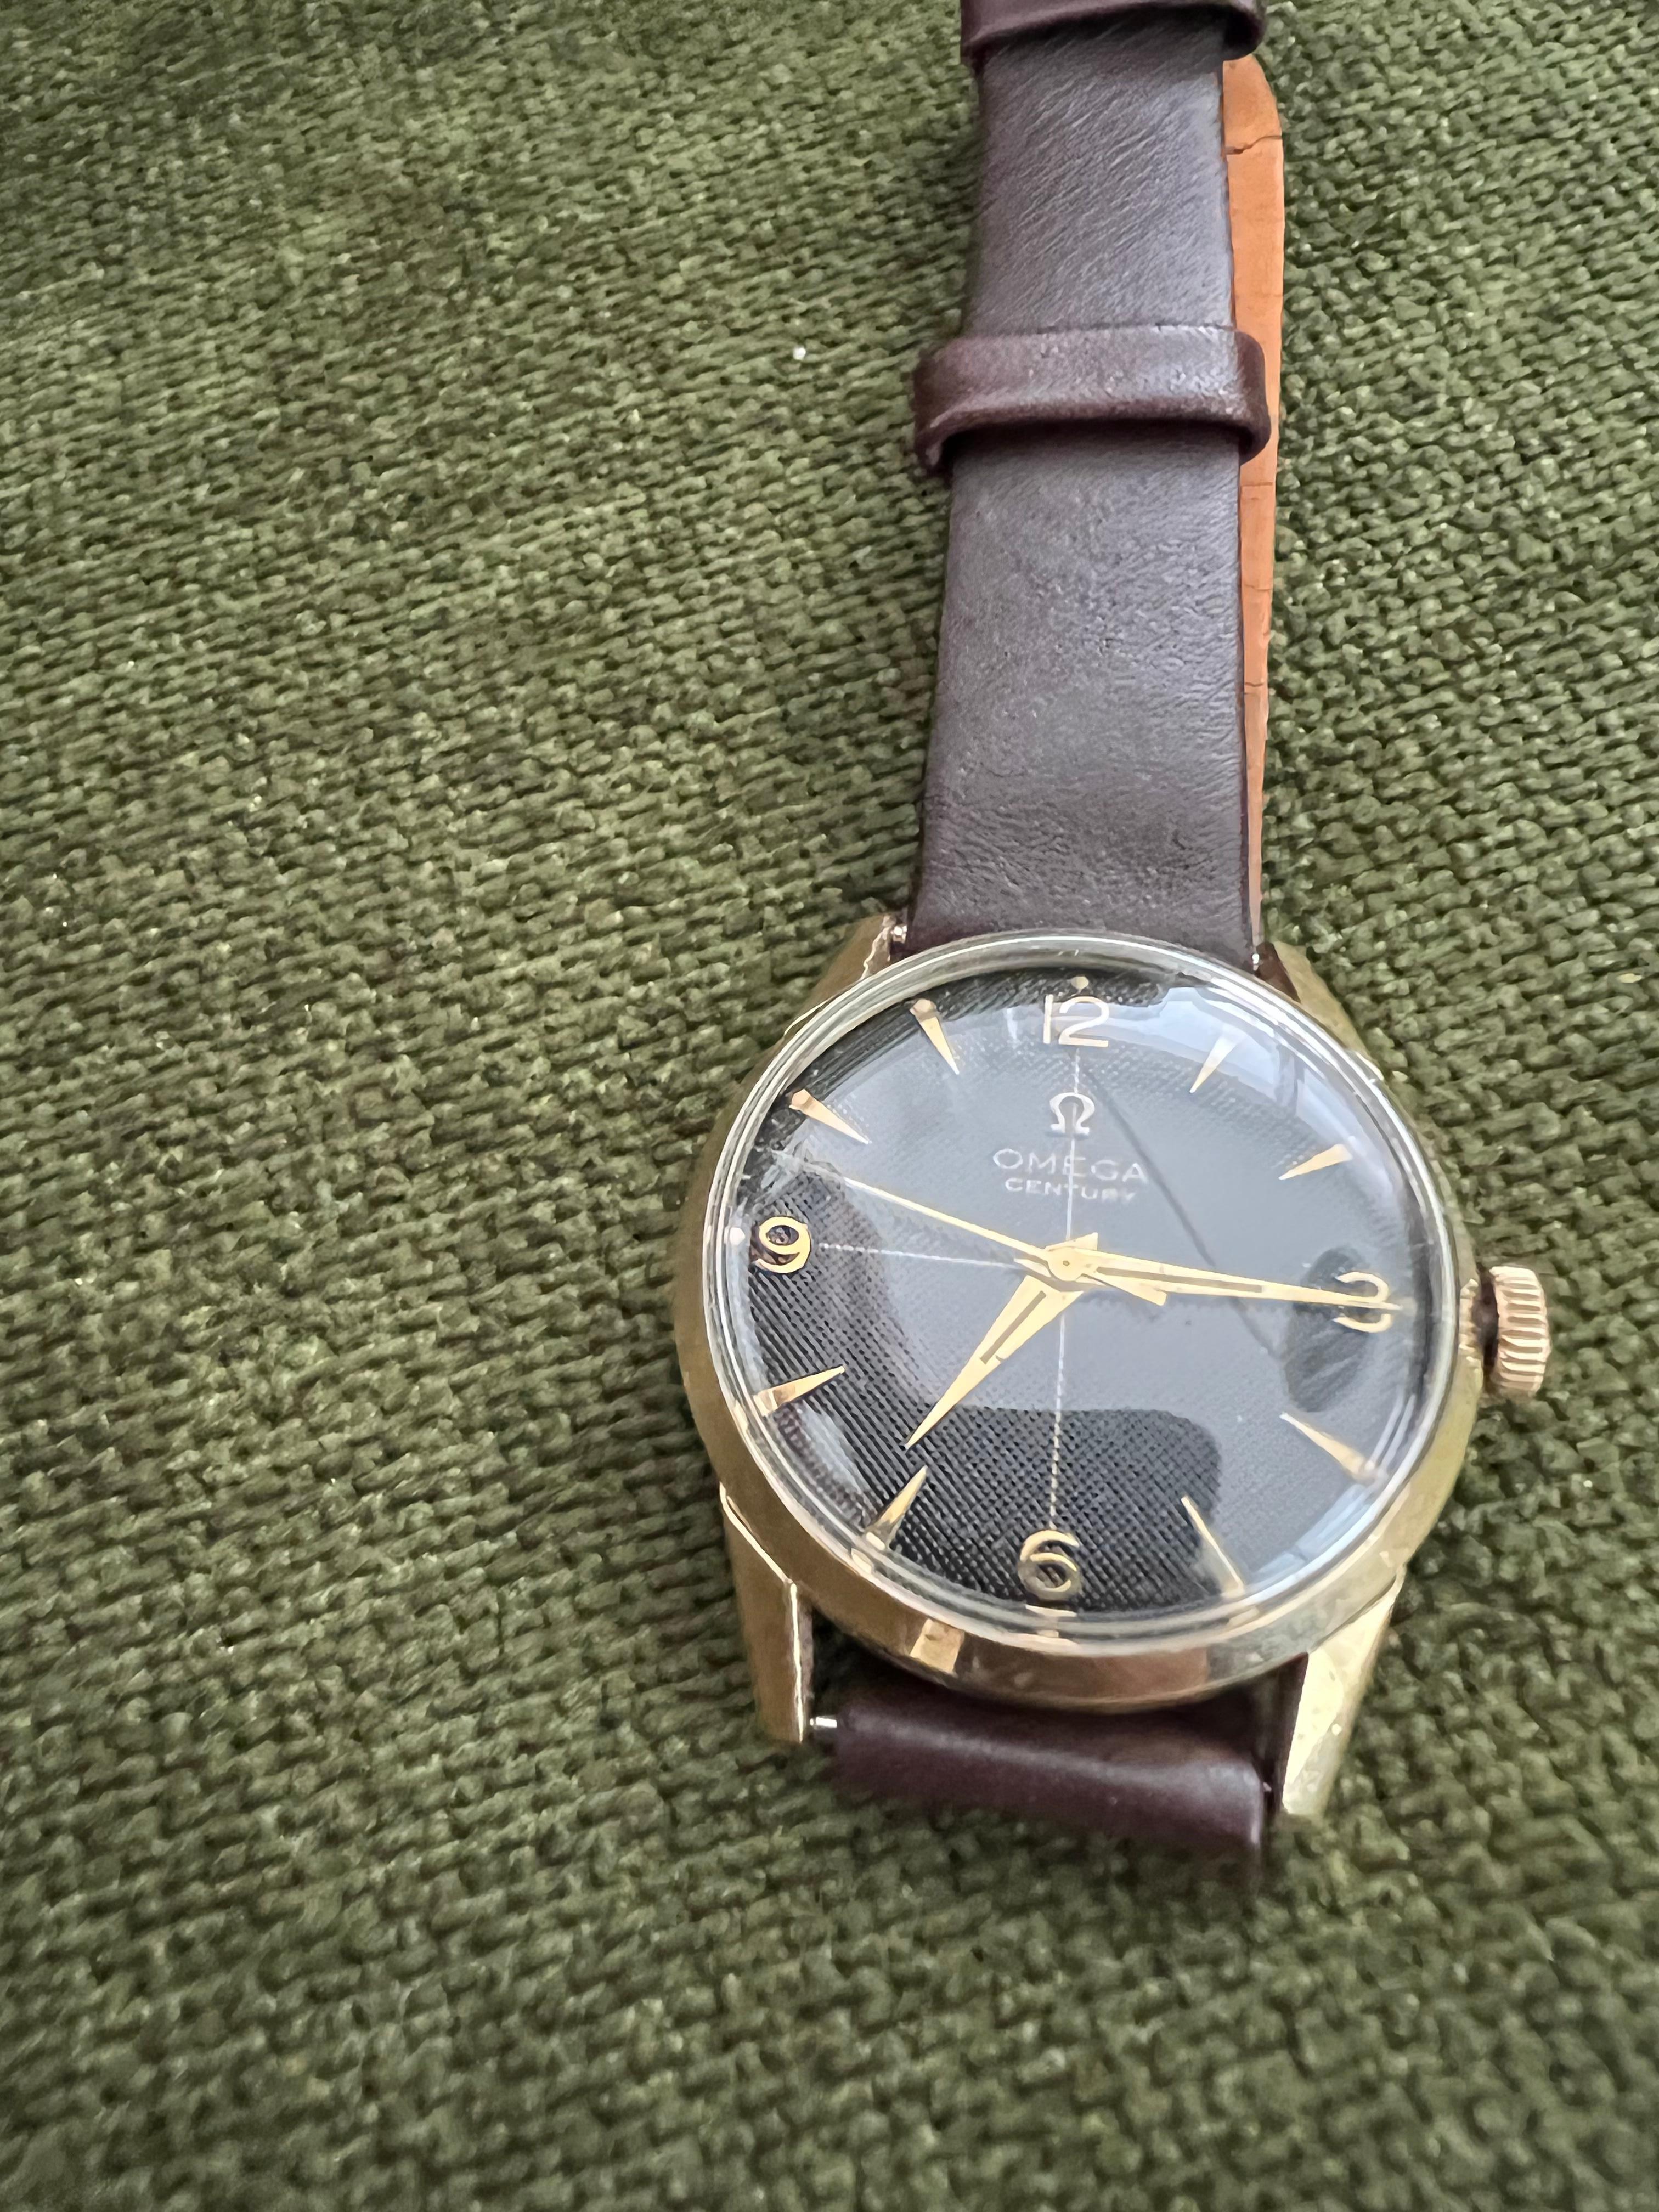 omega century watch